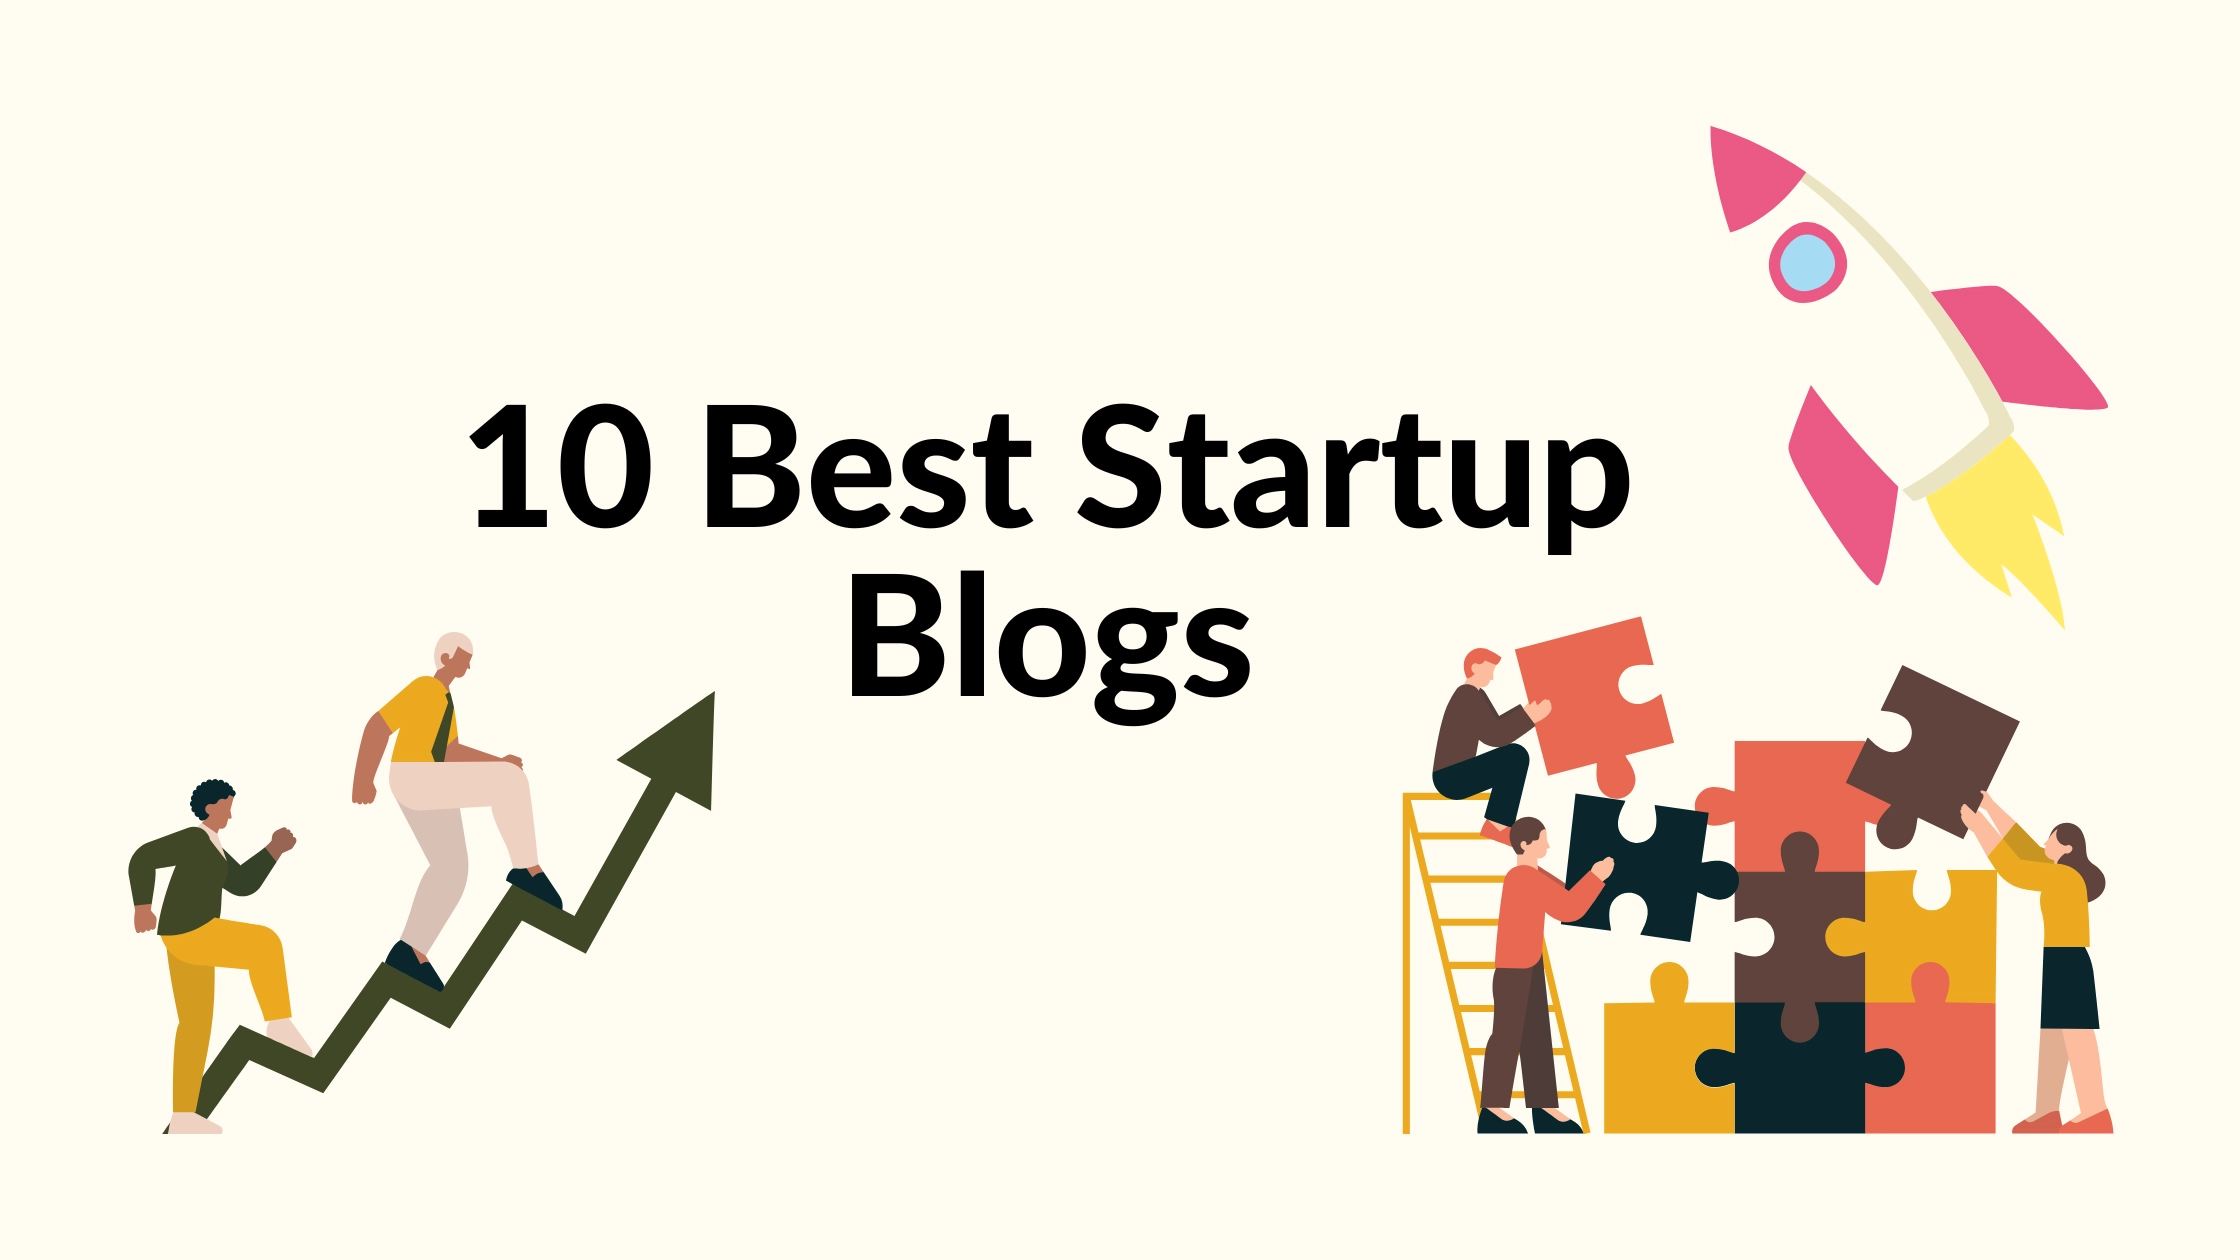 10 Best Startup Blogs by Hyvor